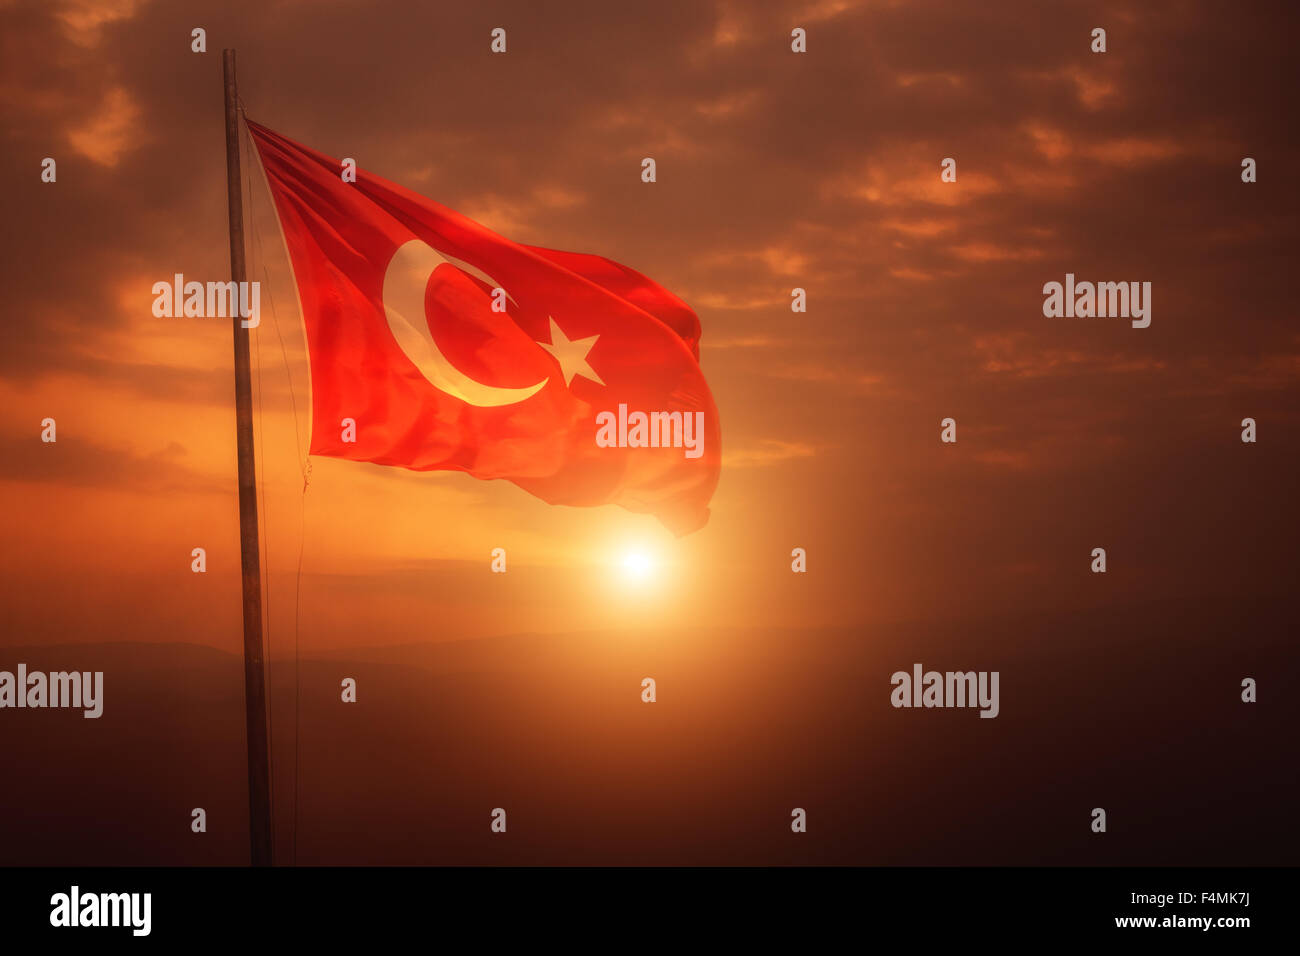 A Turkish flag flies over the sun in Turkey. Stock Photo